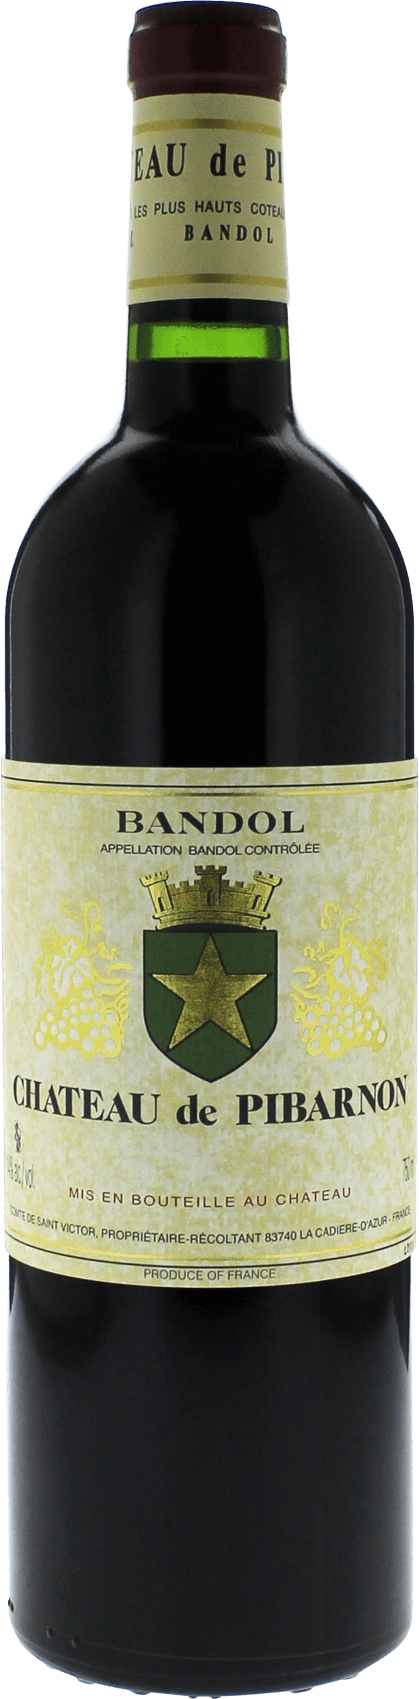 Bandol domaine de pibarnon rouge 2015  Bandol, Slection provence rouge